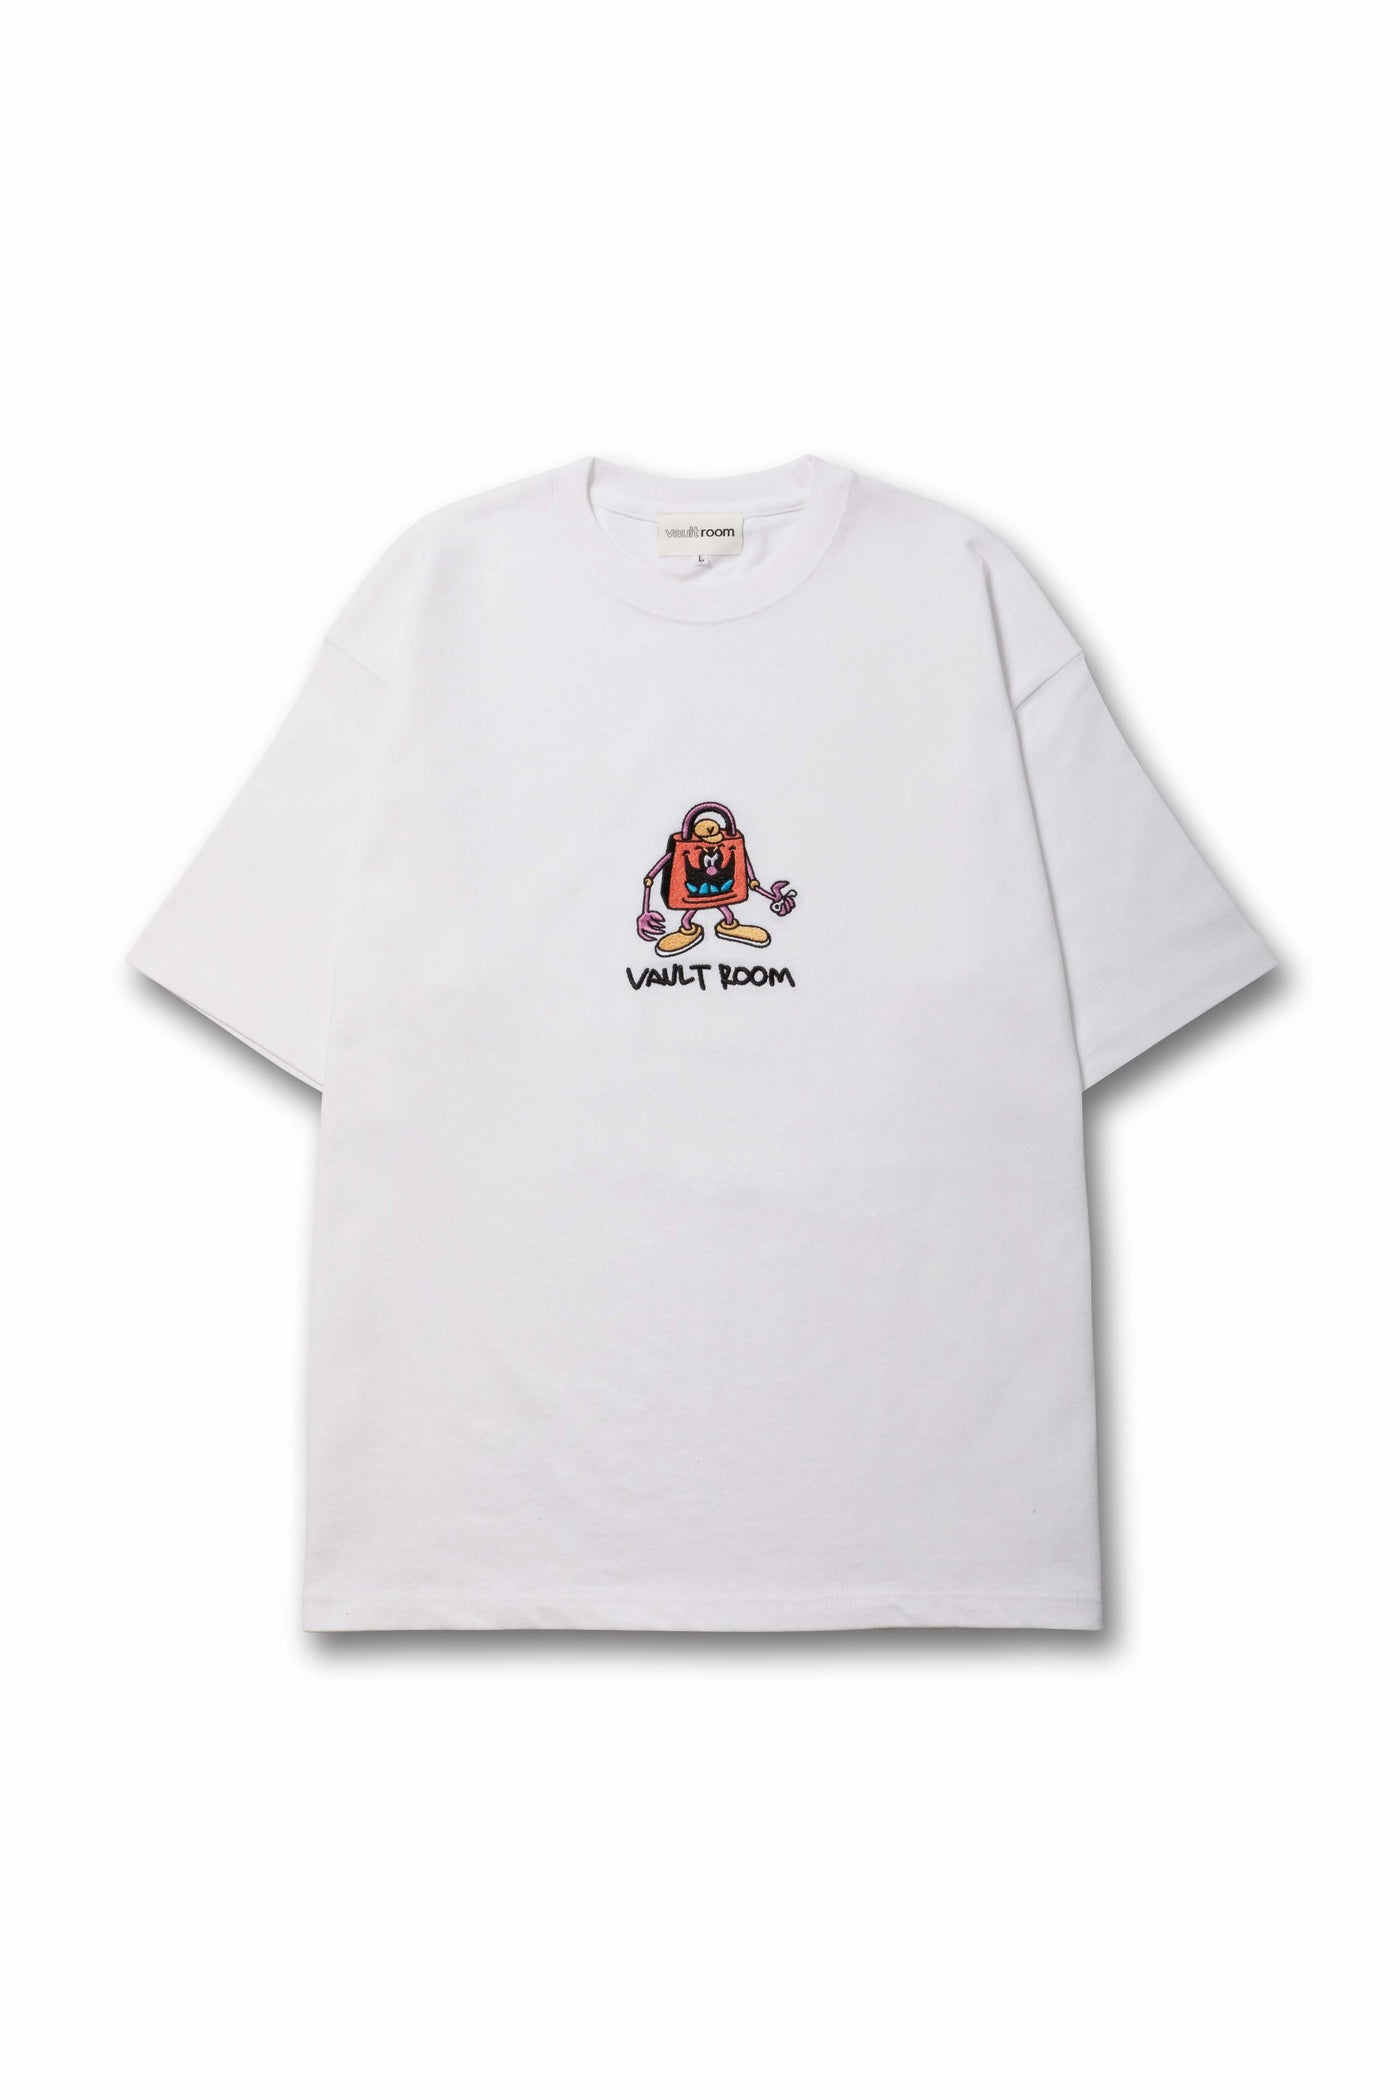 vaultroom BANK ROBBERY TEE / WHT - Tシャツ/カットソー(半袖/袖なし)